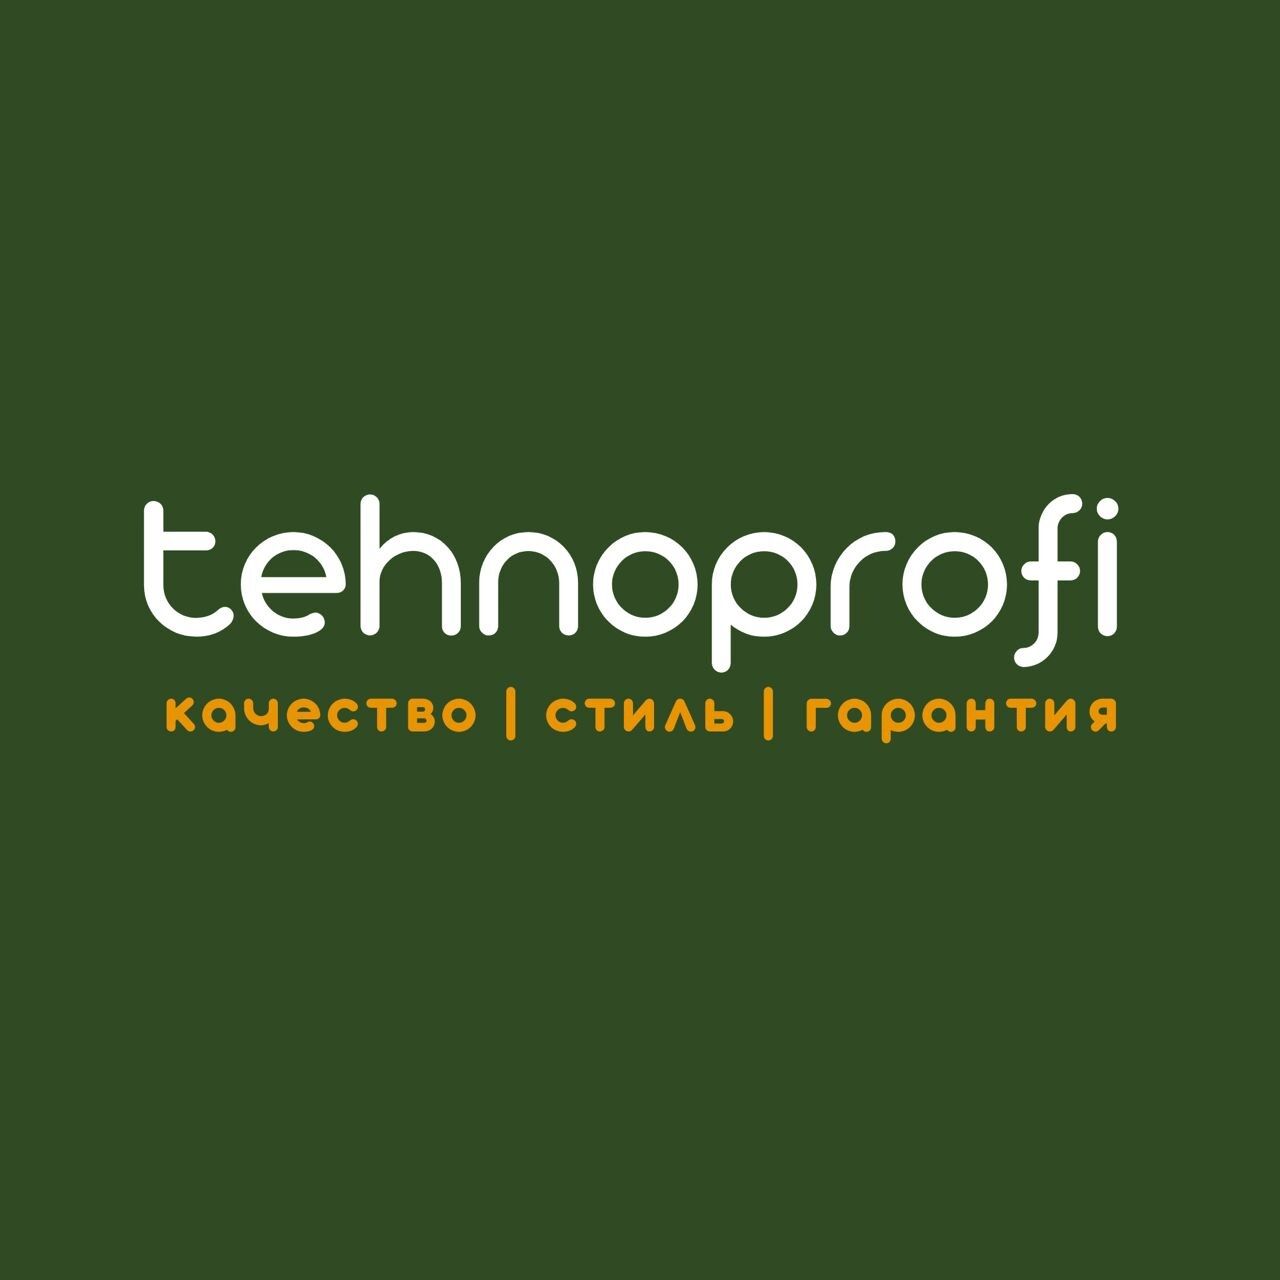 tehnoprofi ➤ Кыргызстан ᐉ Бизнес-профиль компании на lalafo.kg